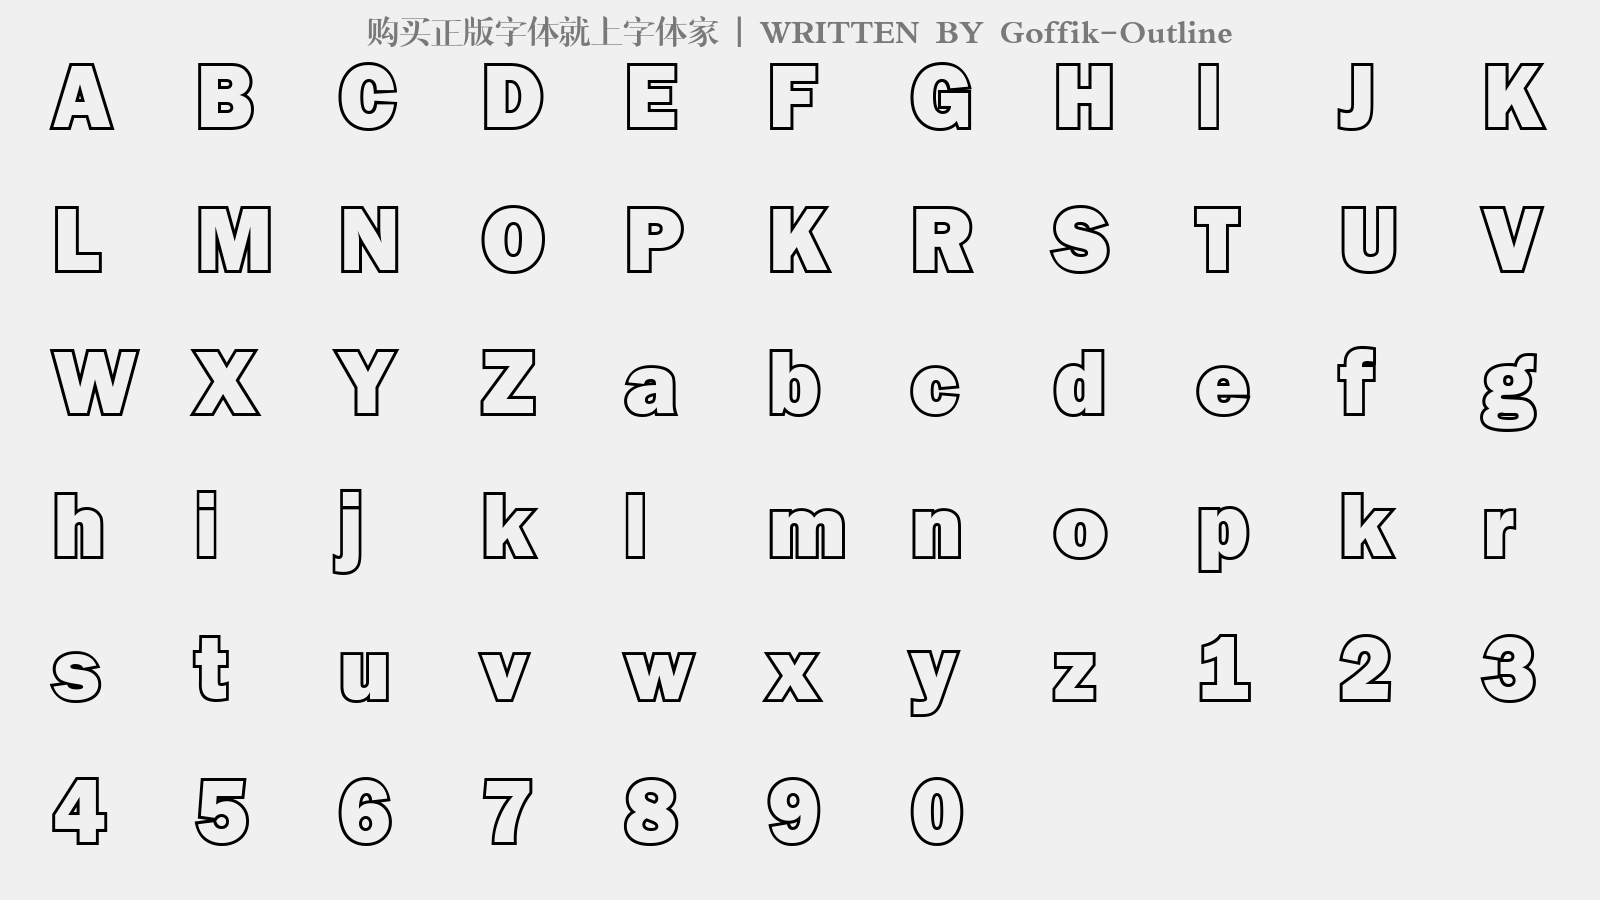 Goffik-Outline - 大写字母/小写字母/数字